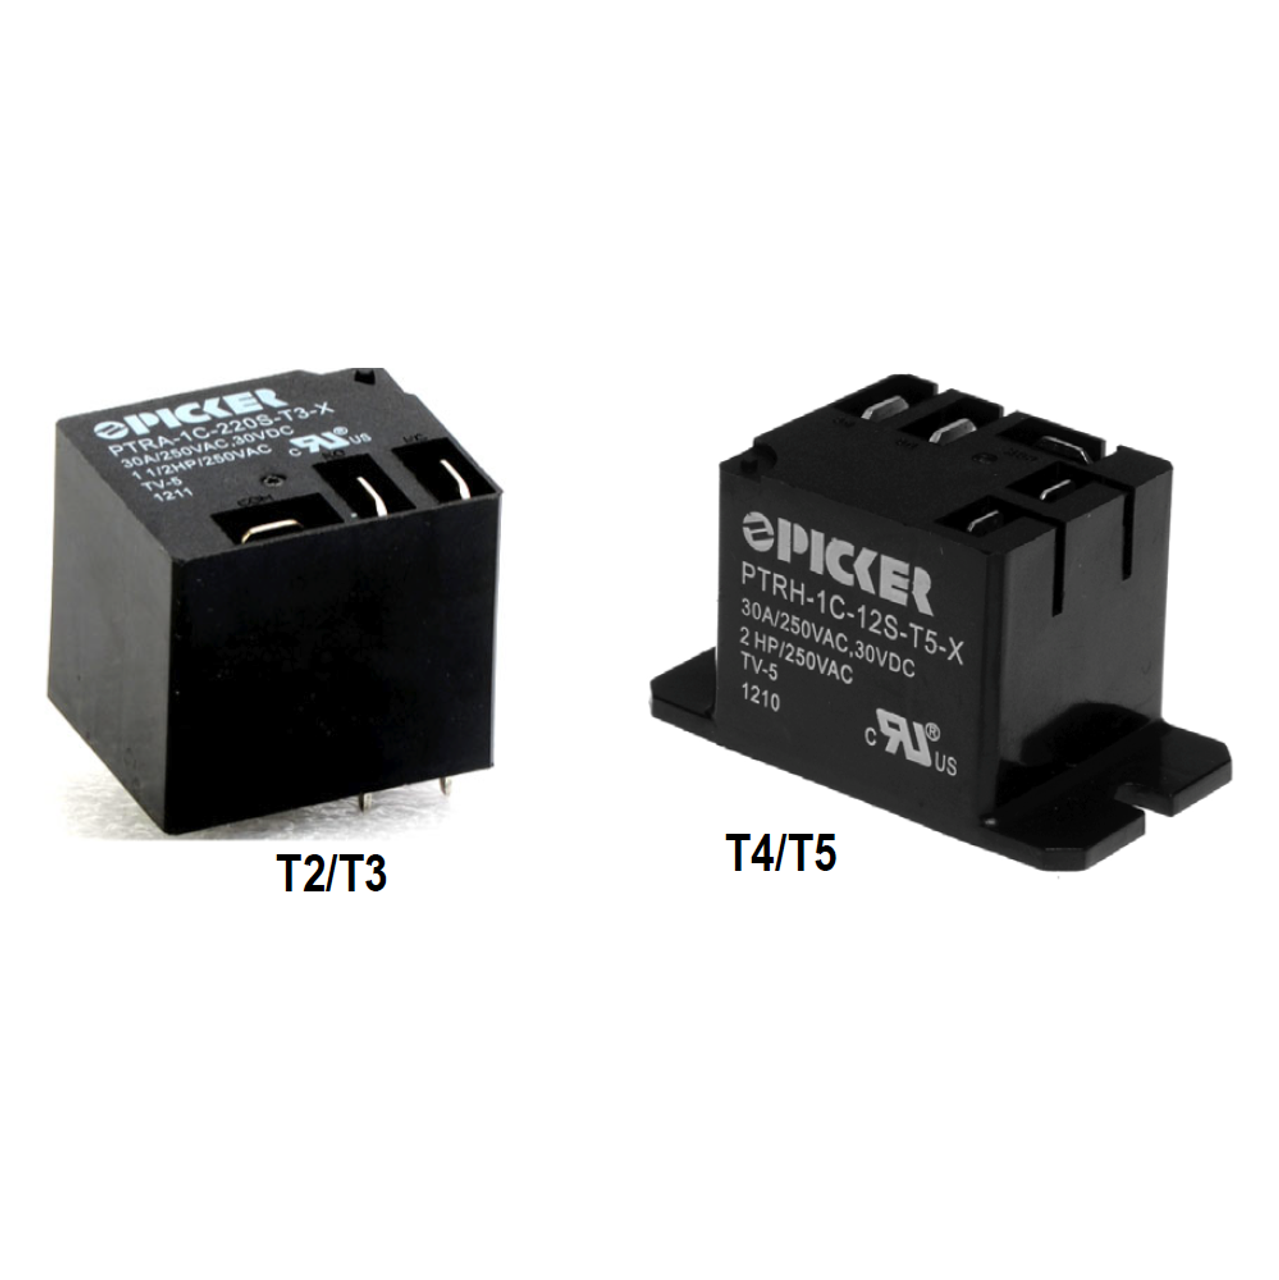 Picker PTRH-1C-110SFT-T4-X67 Power Relays